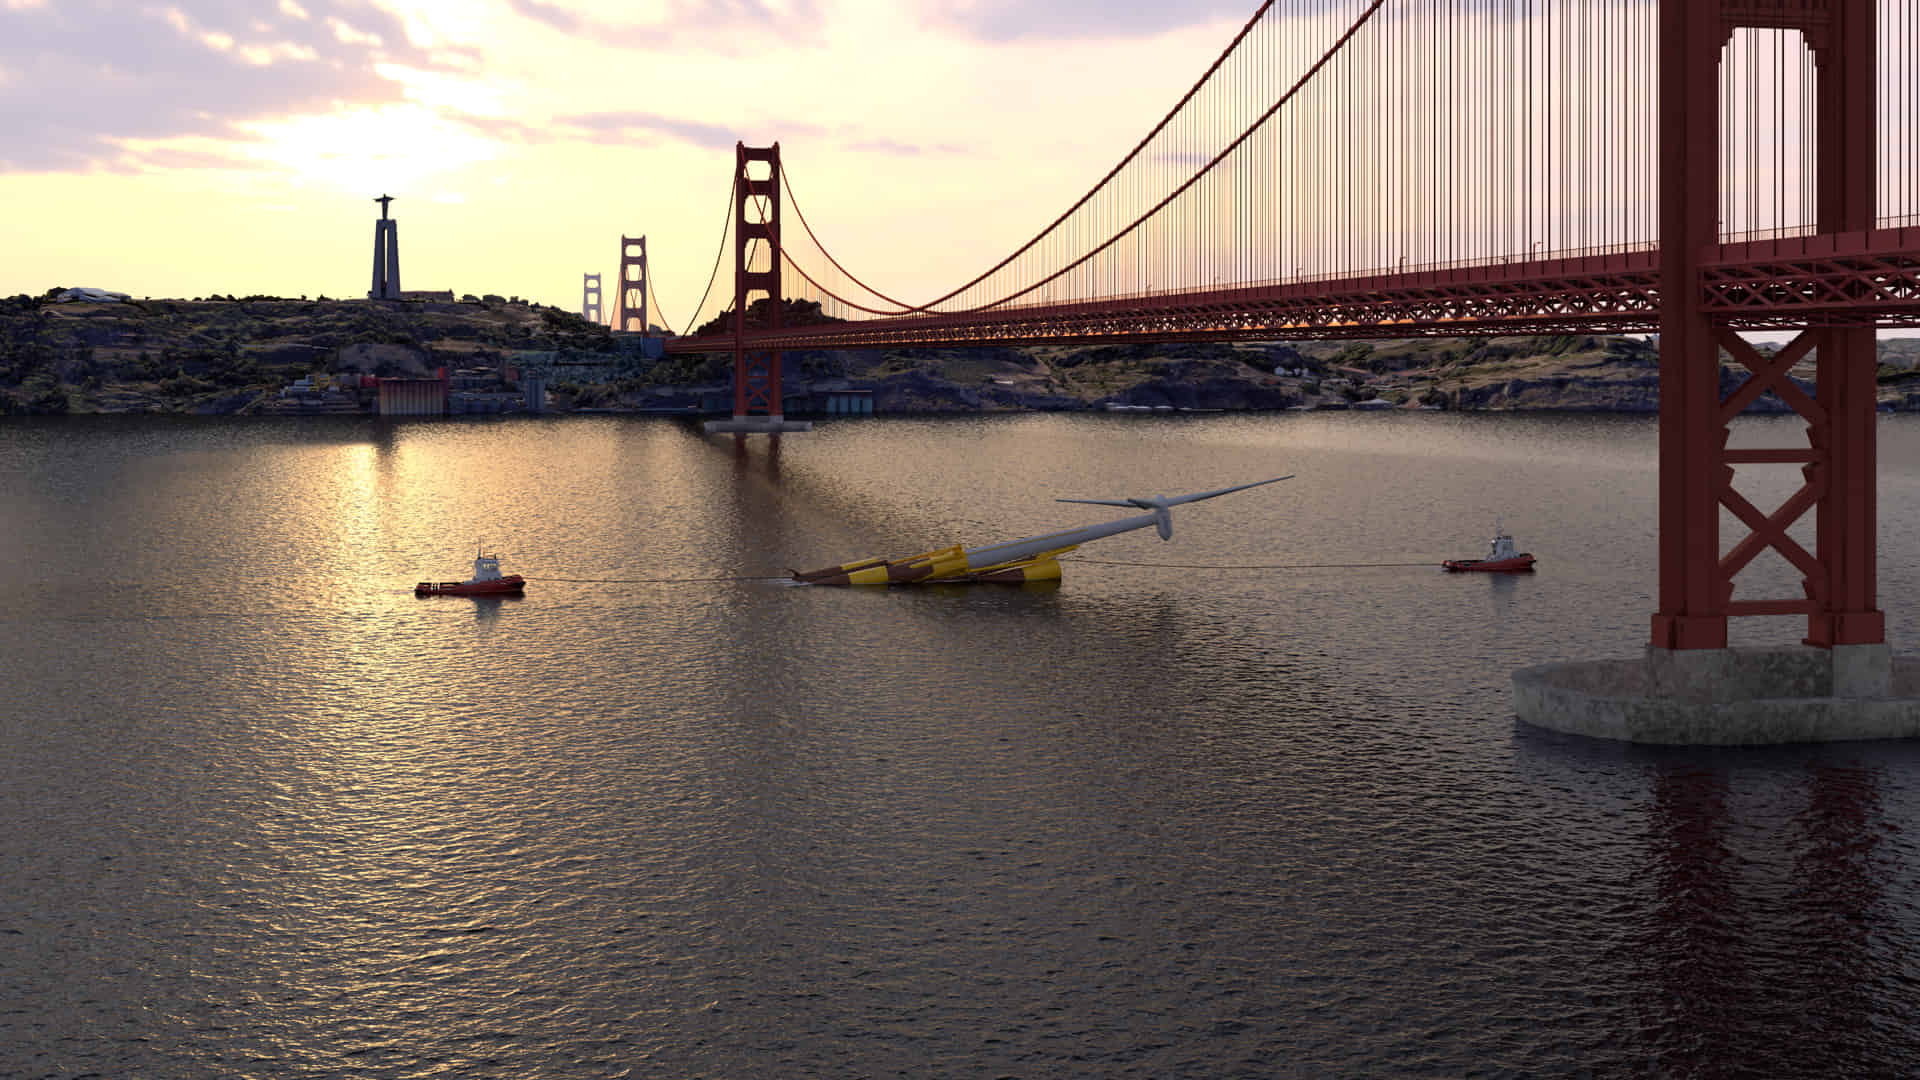 An image rendering Aikido Technologies' platform under the Golden Gate bridge